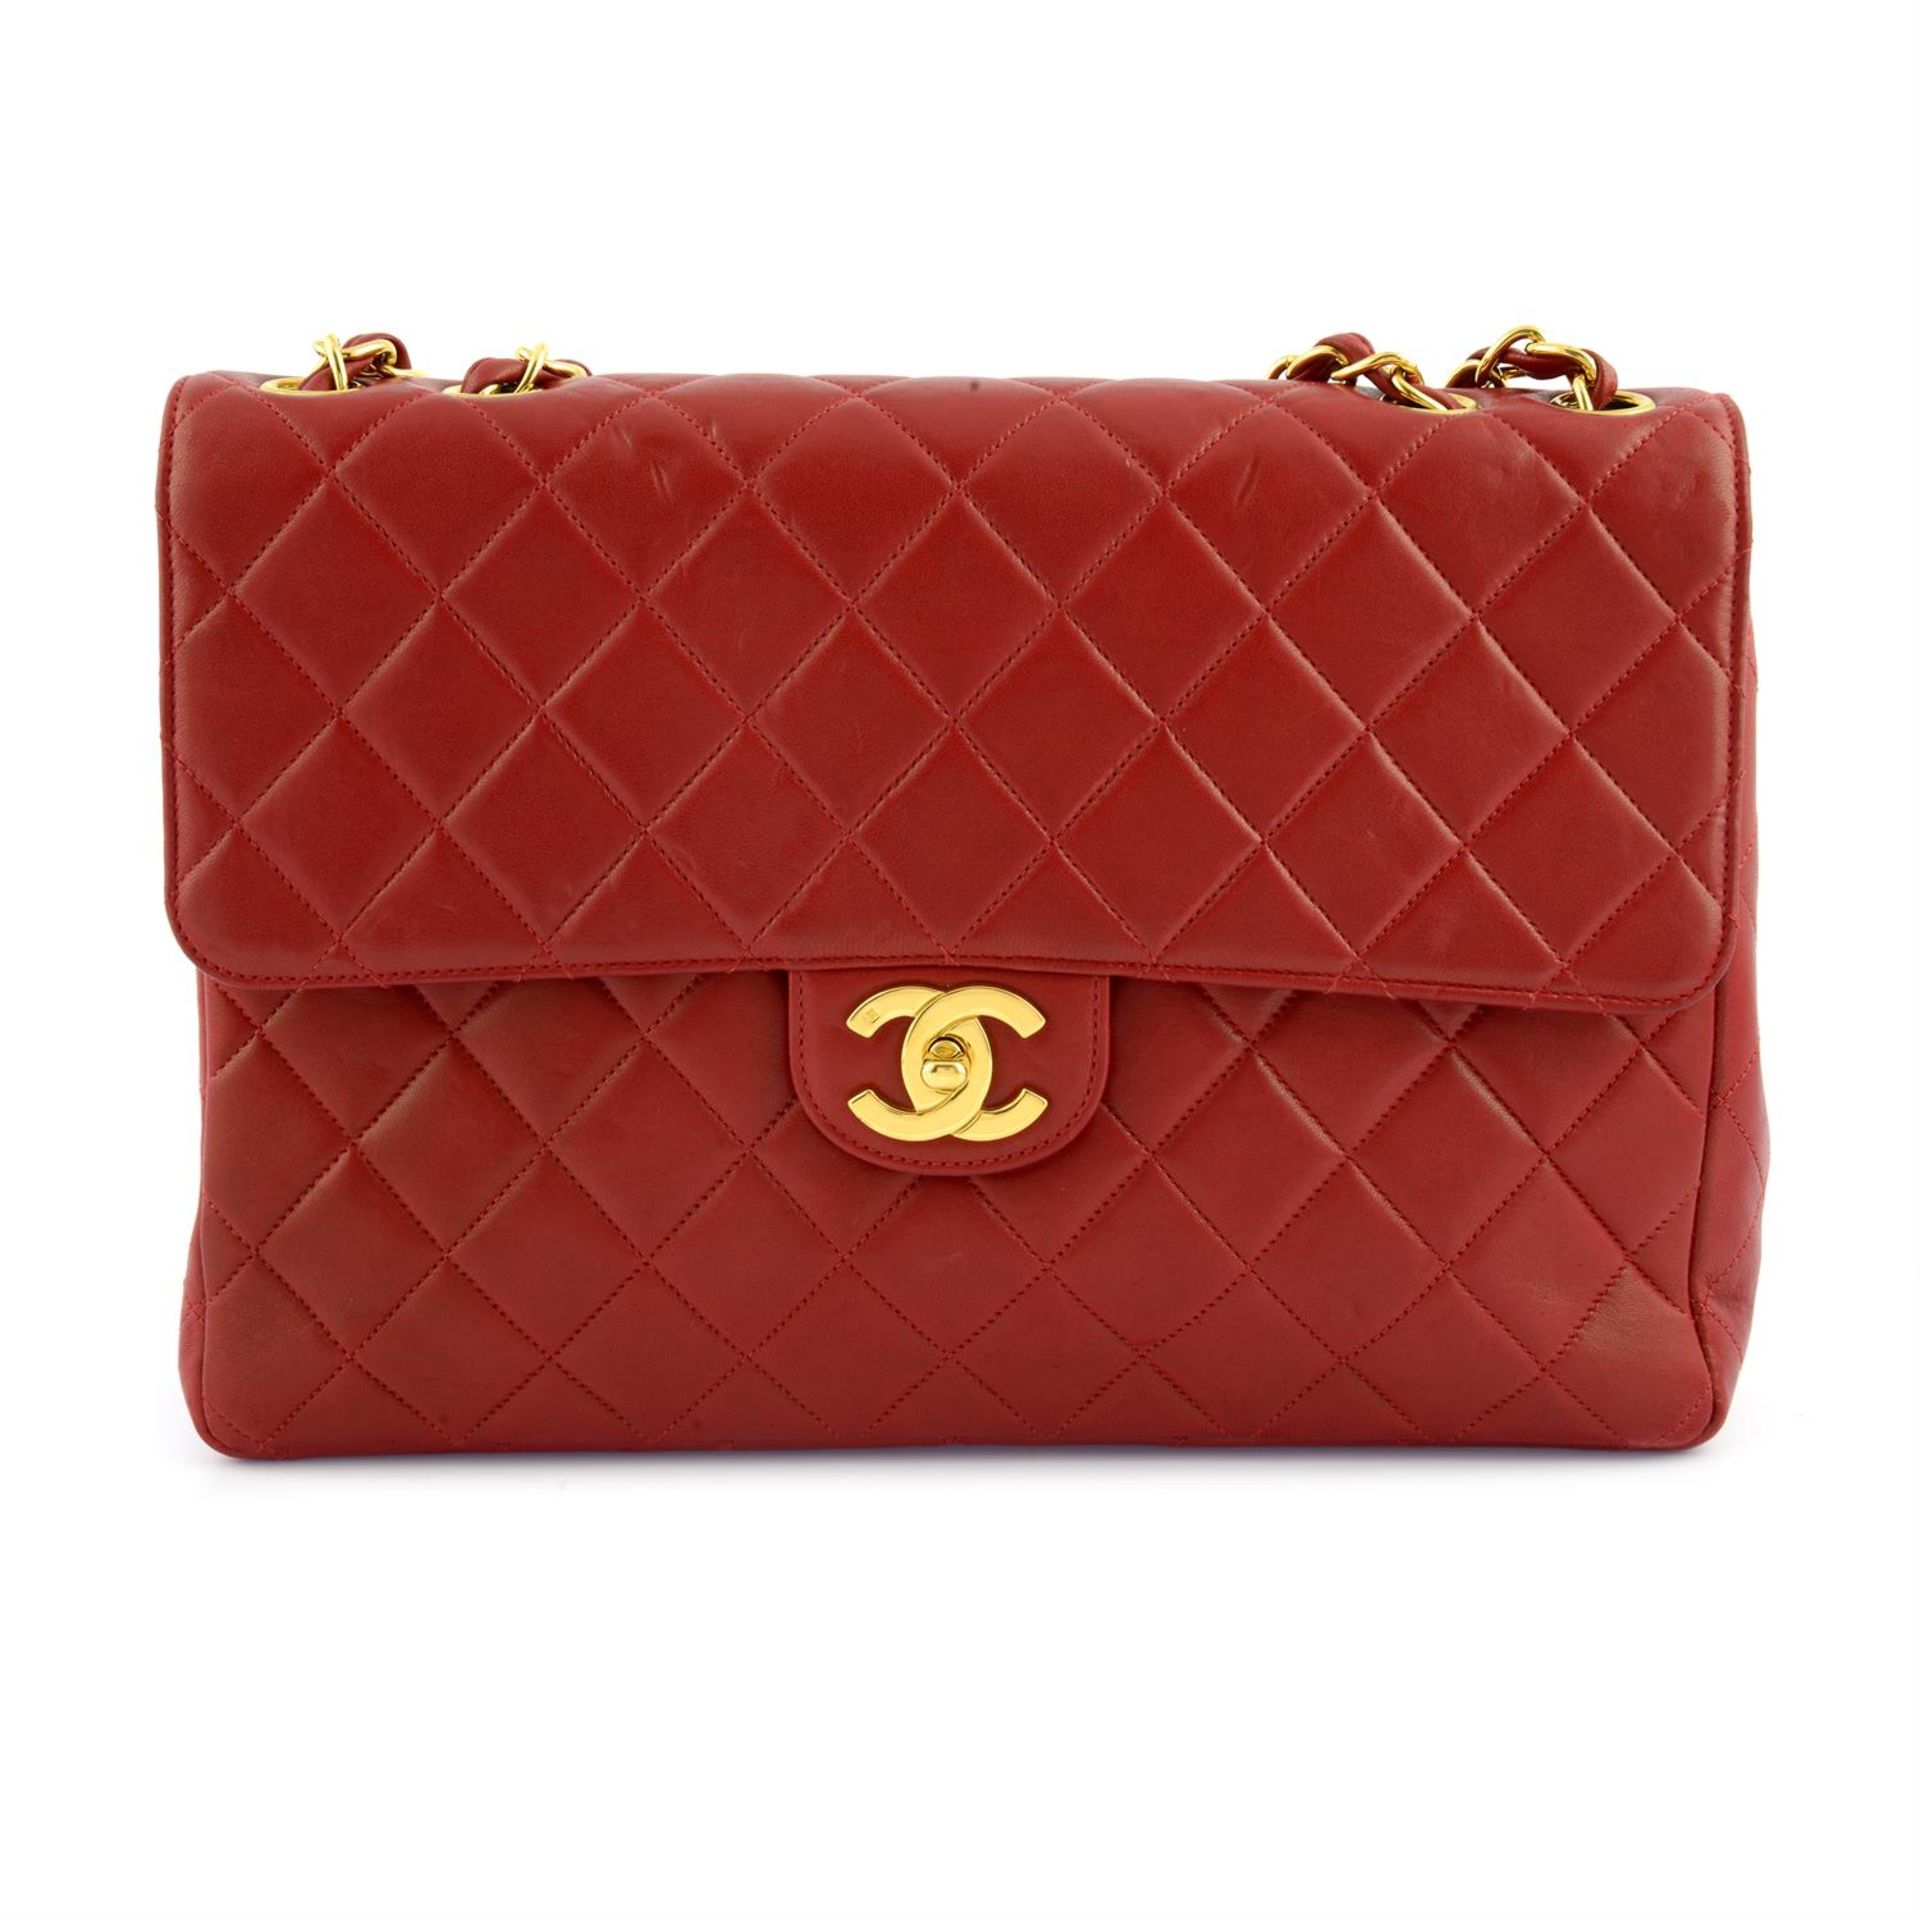 CHANEL - a red lambskin leather Jumbo flap handbag.